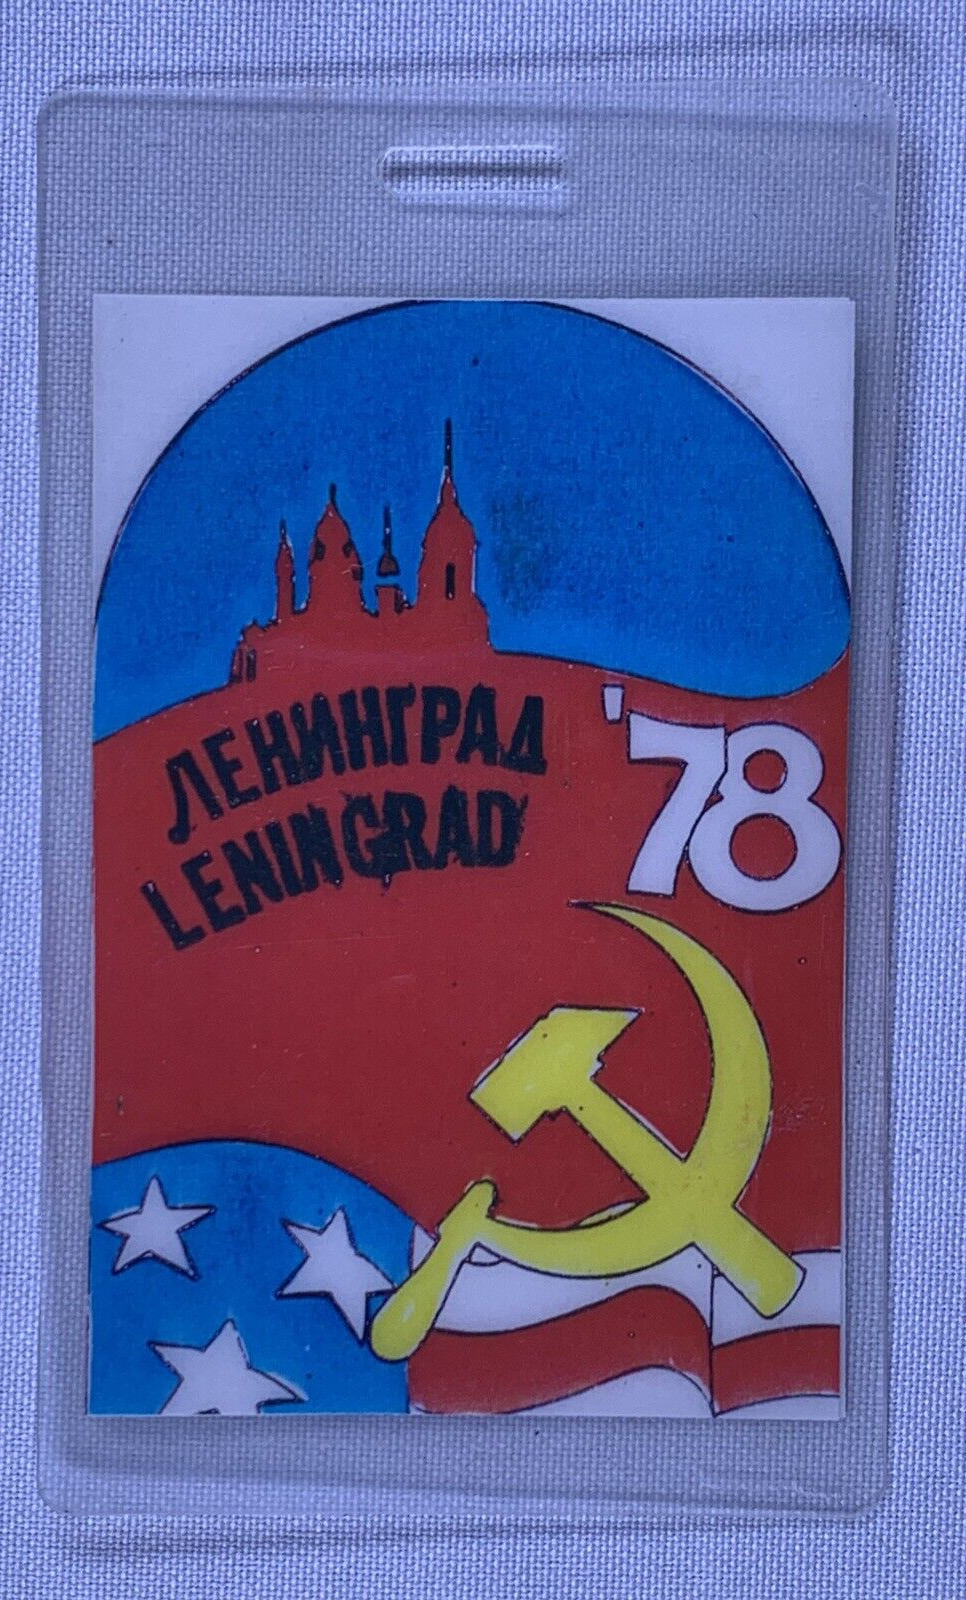 Joan Baez Beachboys Santana Pass Ticket Original Leningrad Moscow 1978